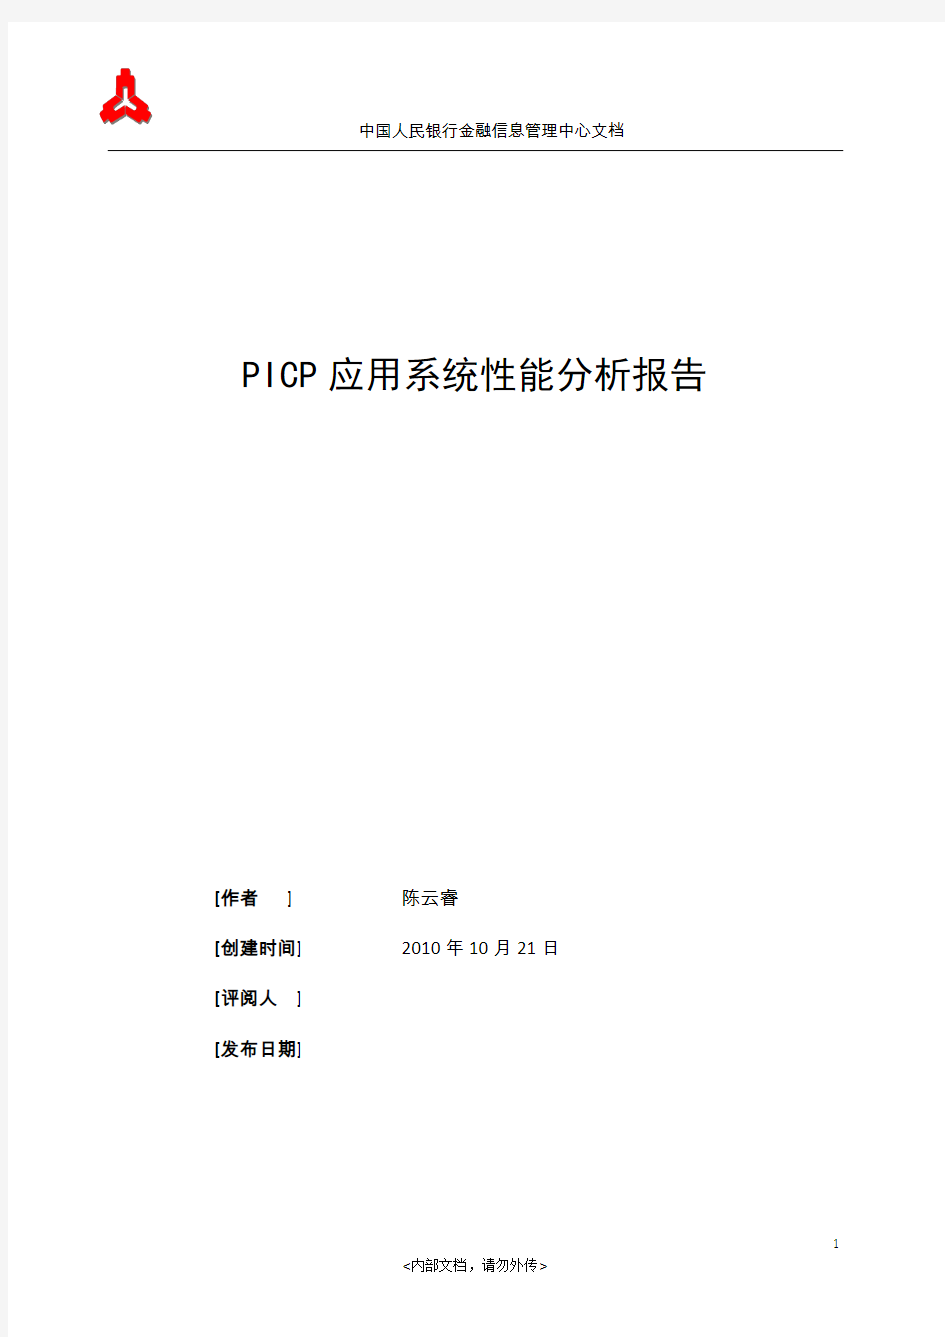 PICP应用系统性能分析报告(中心版4)